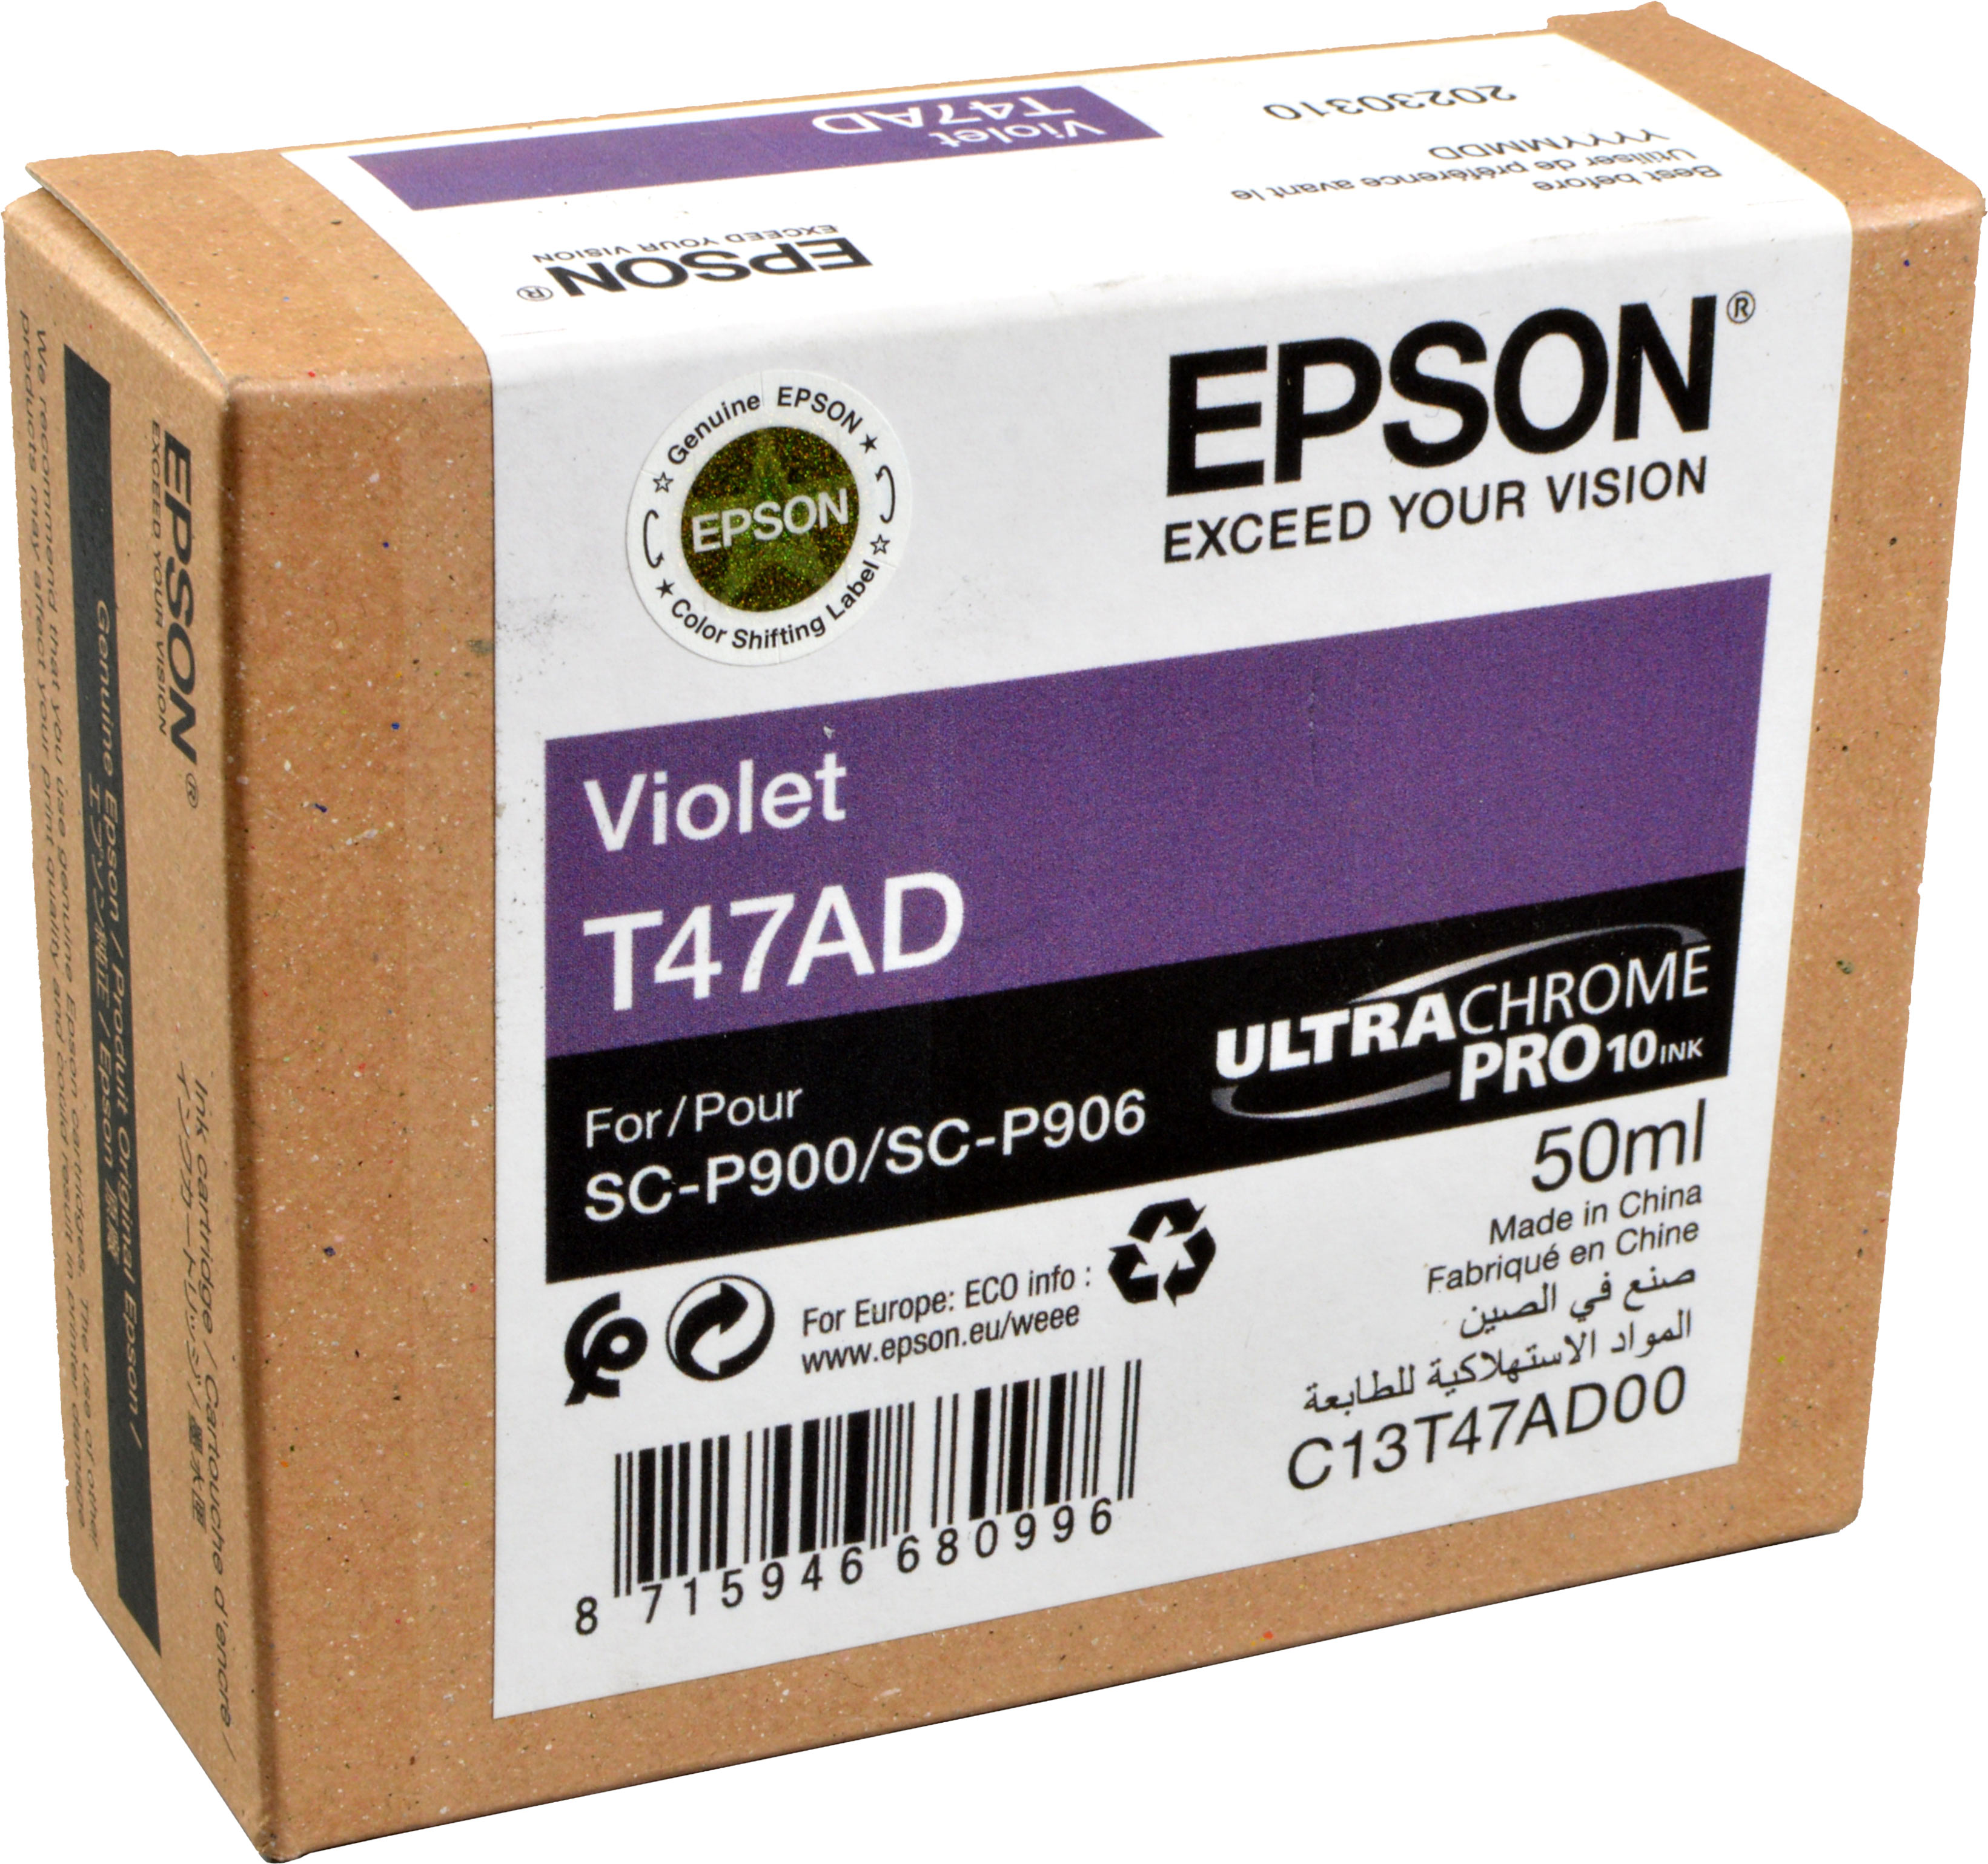 Epson Tinte C13T47AD00  T47AD  violet